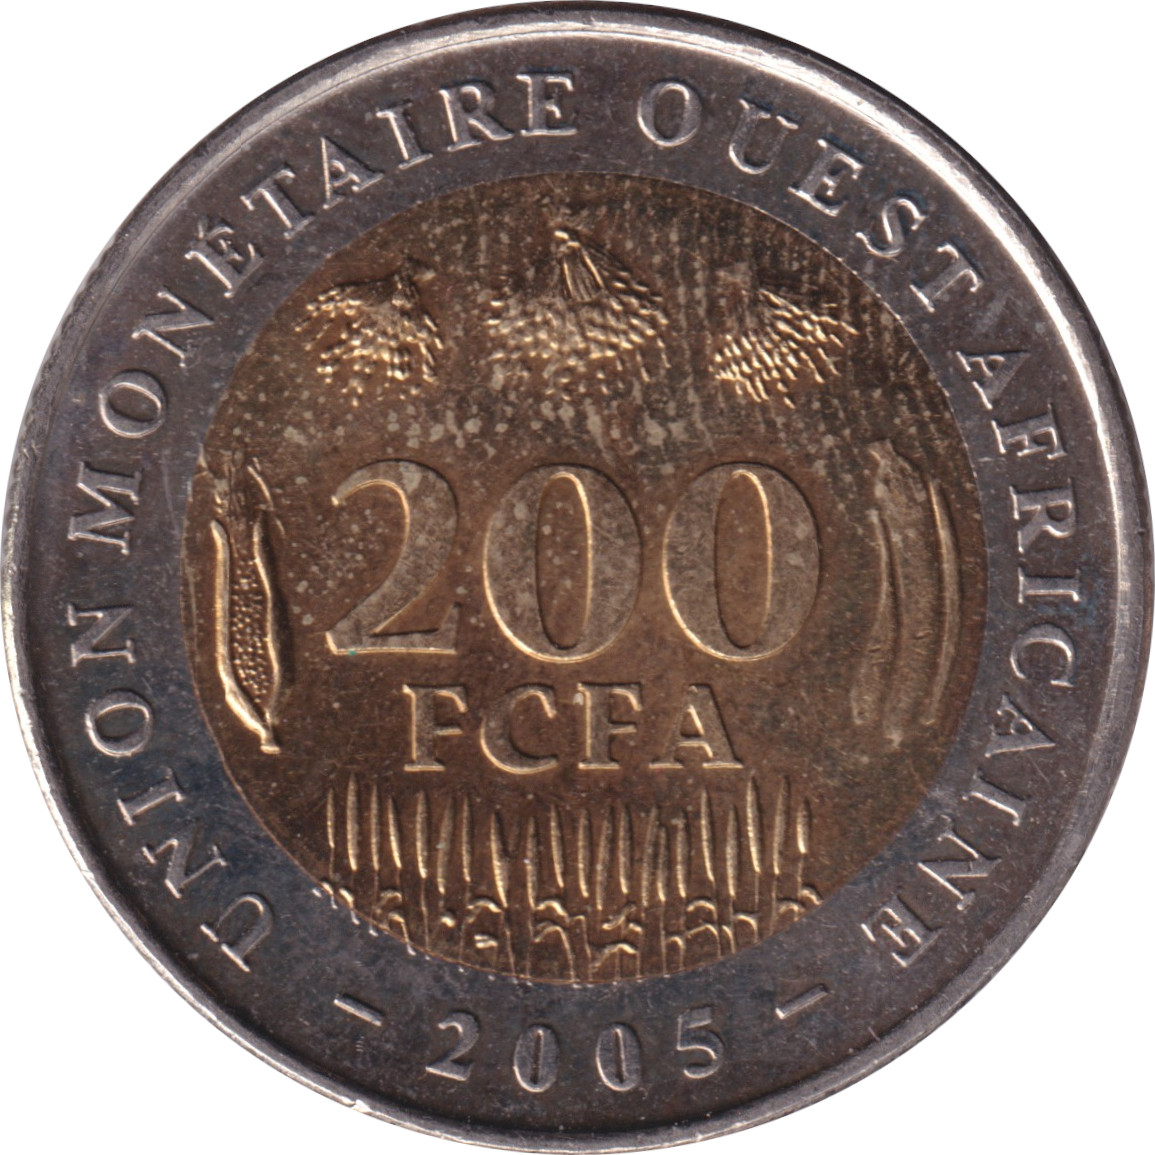 200 francs - Taku